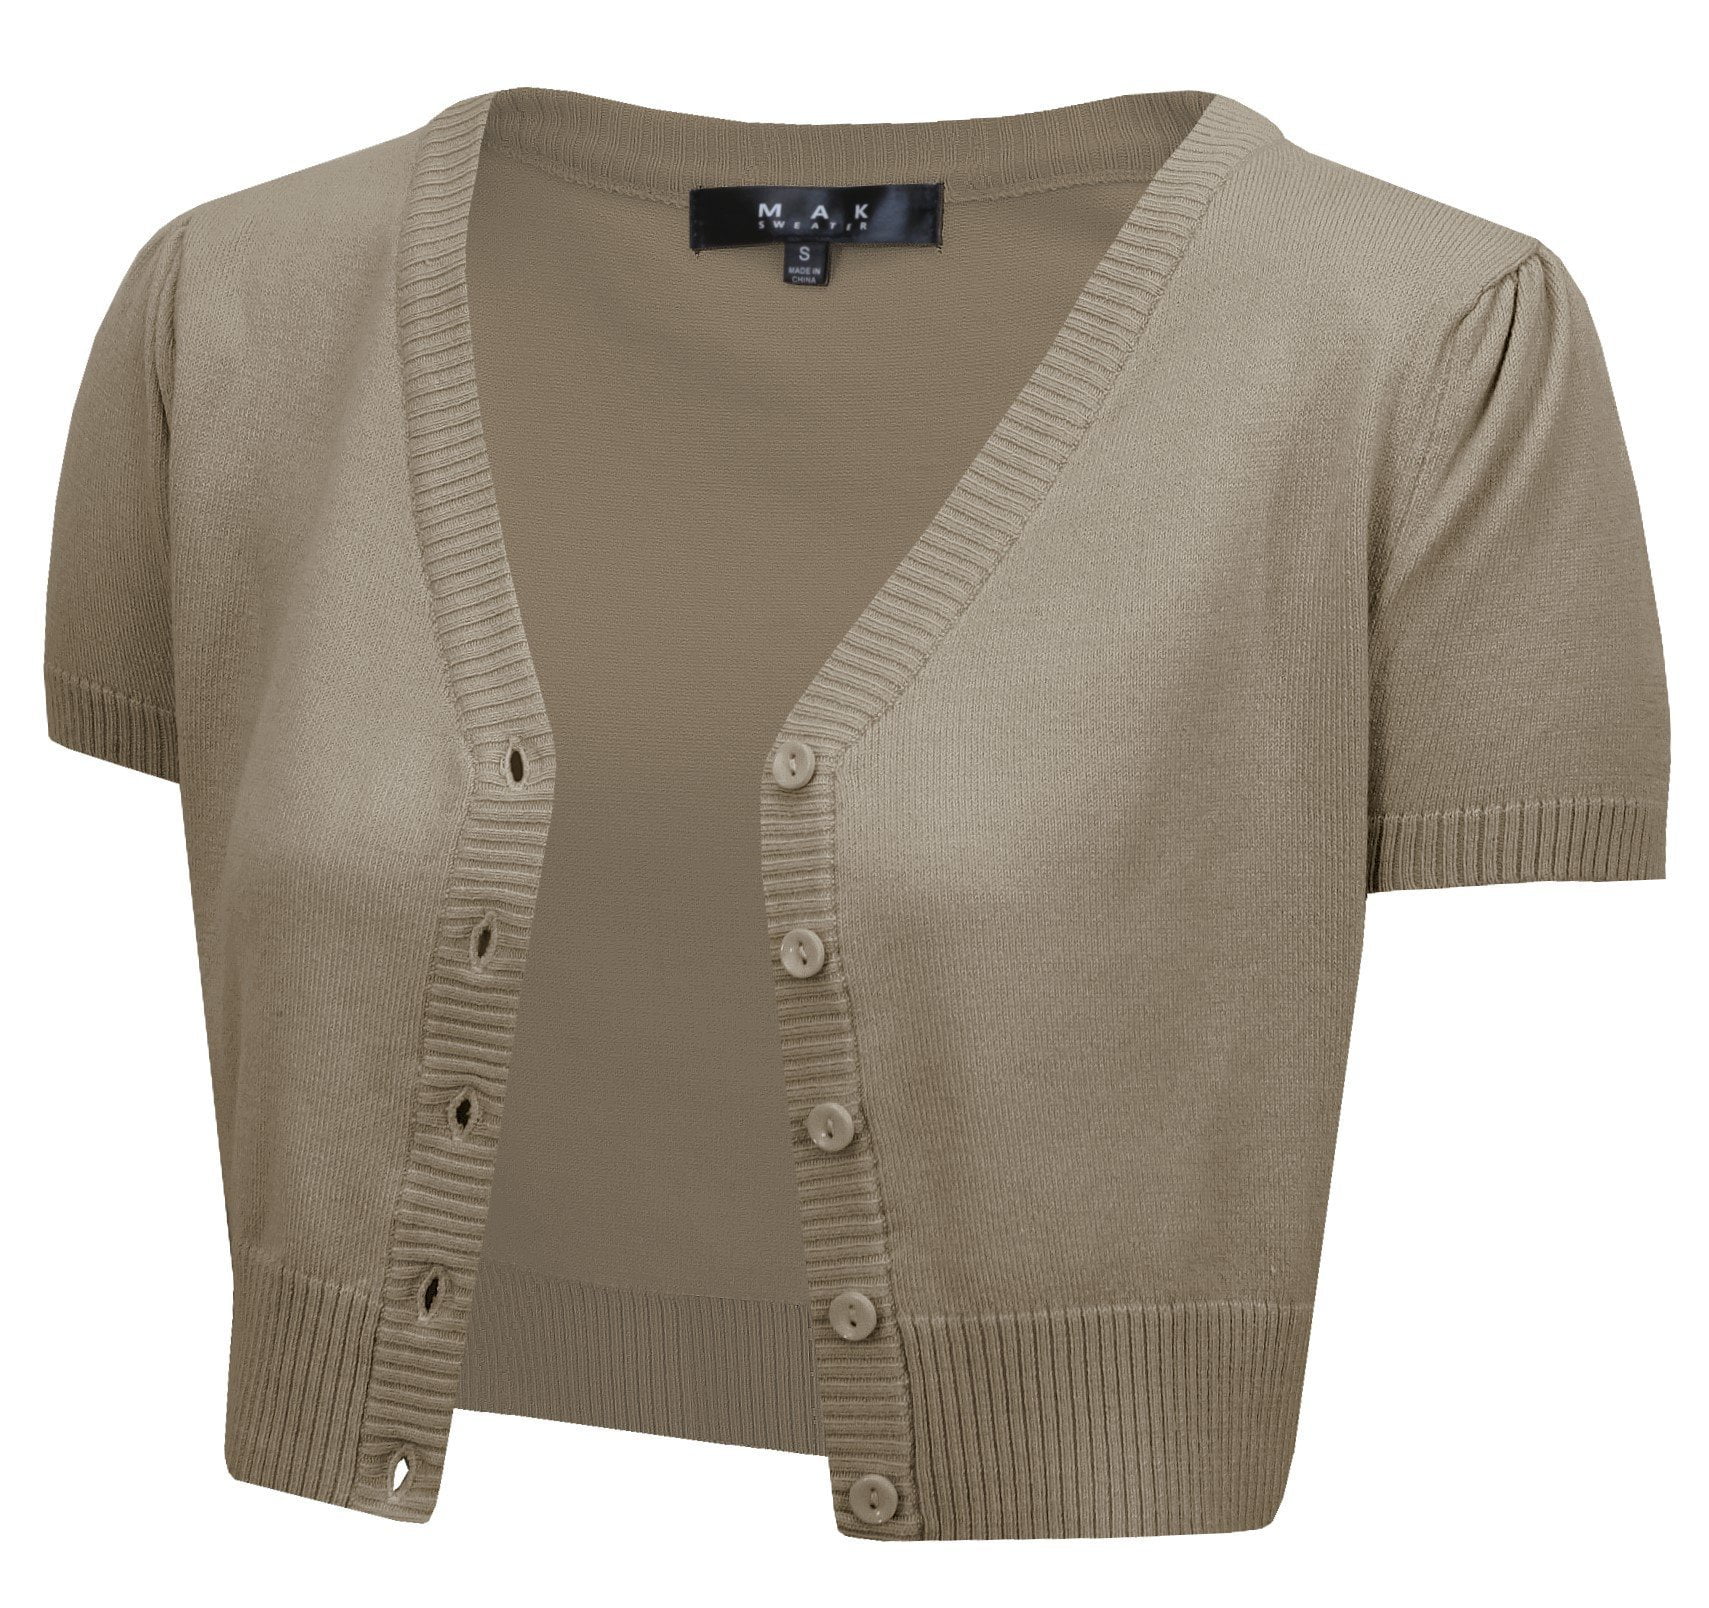 FLORIA Womens Button Down Short Sleeve Cropped Bolero Cardigan Sweater S-4X